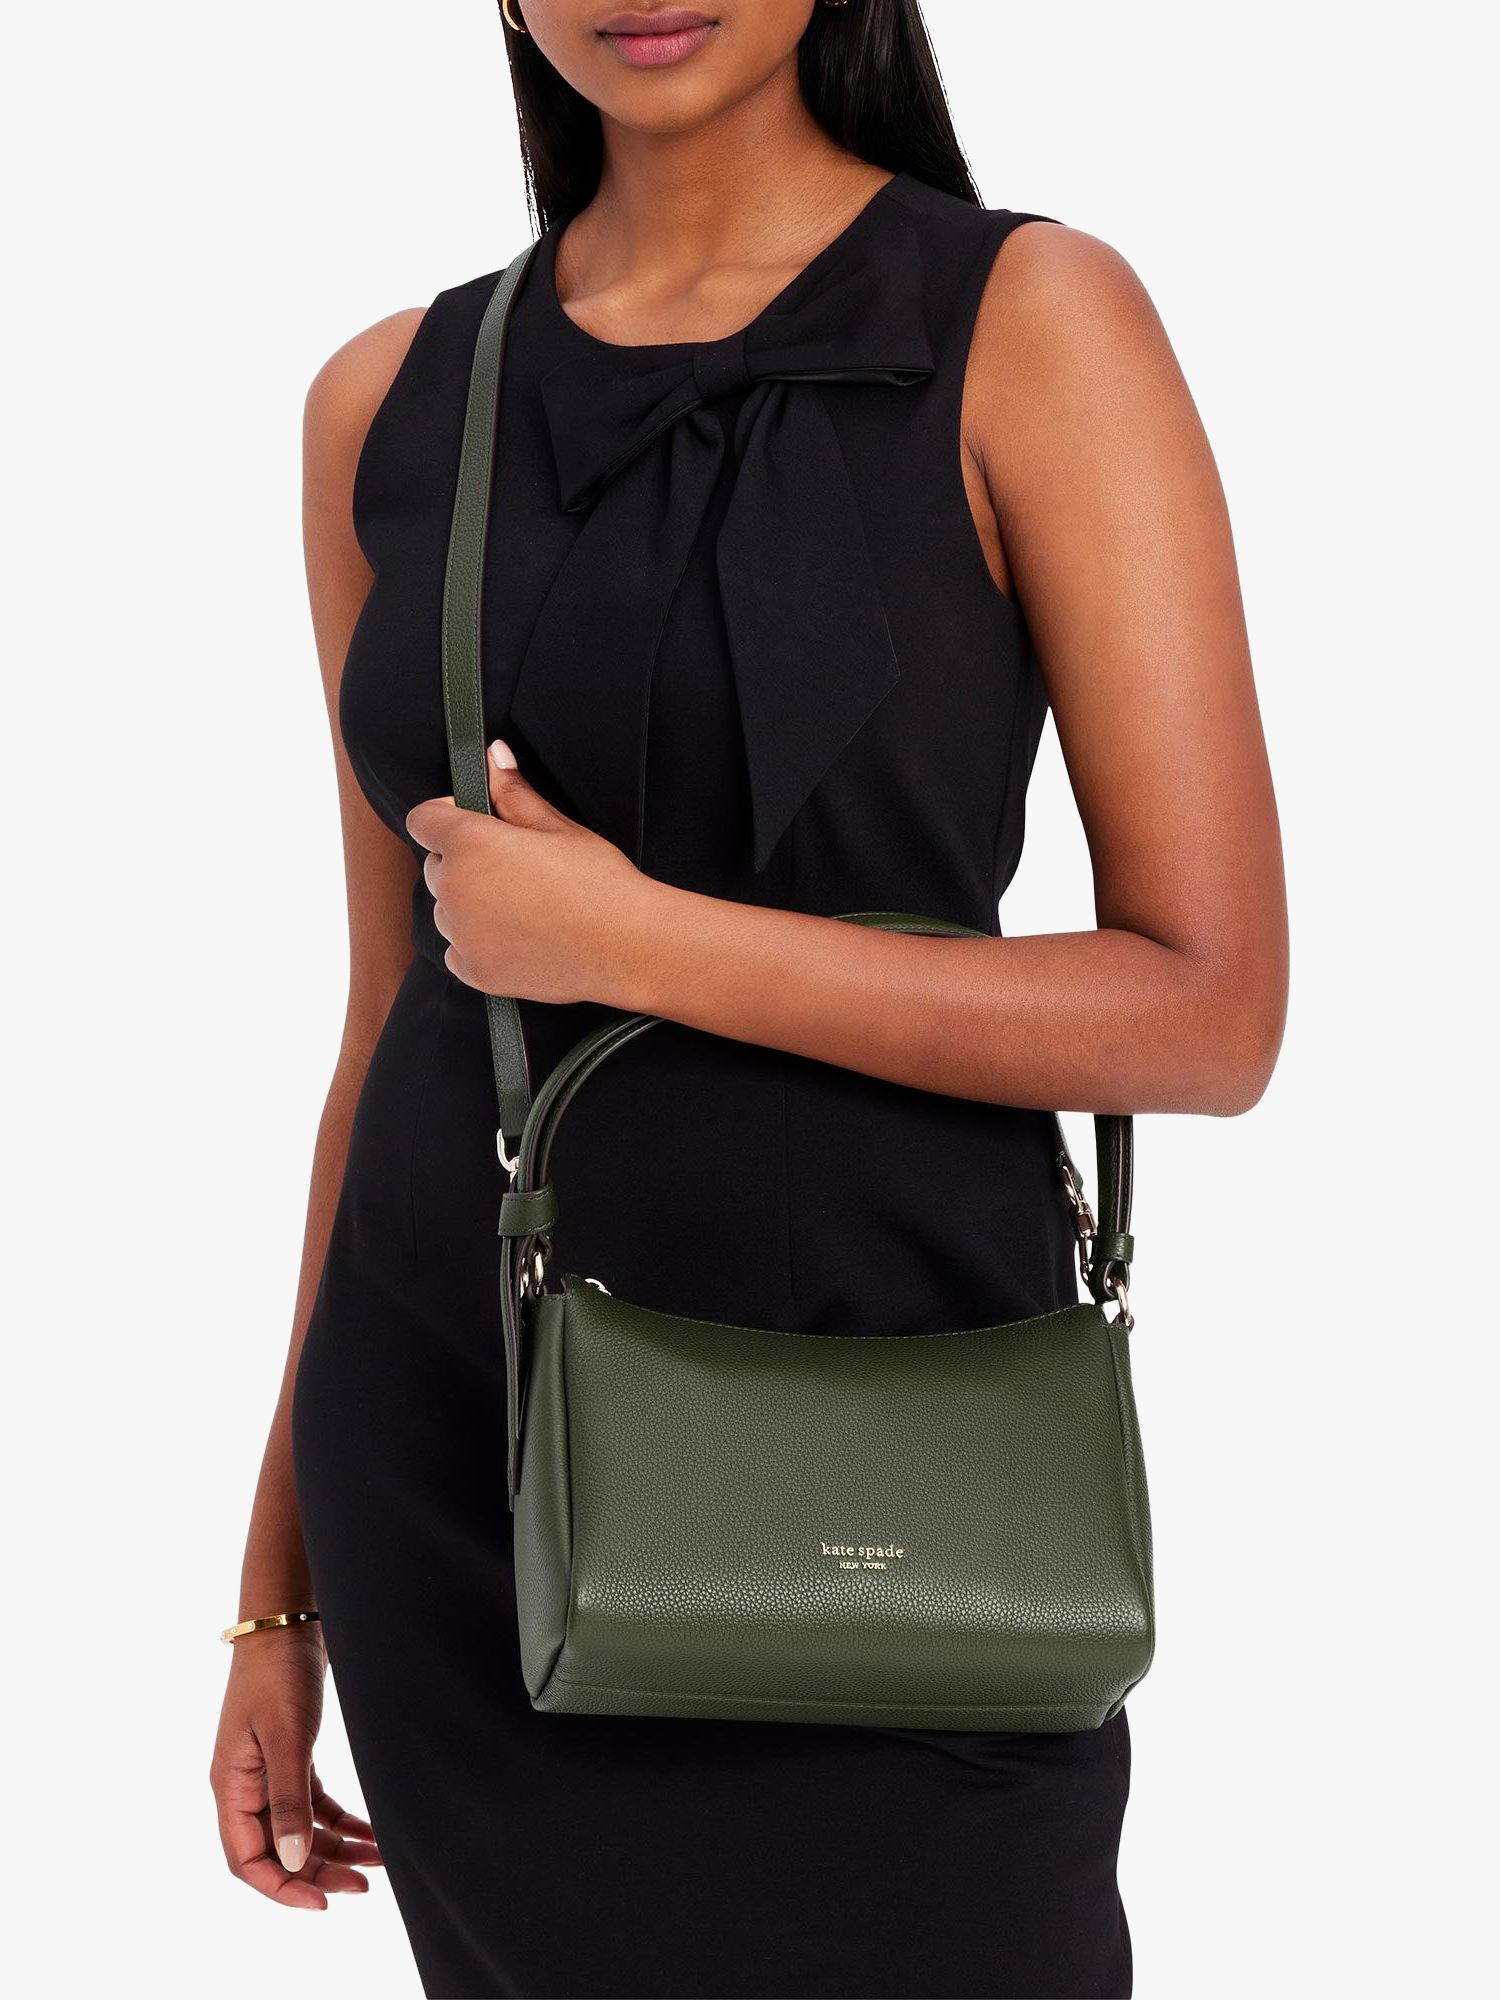 Kate Spade New York Knott Medium Leather Shoulder Bag